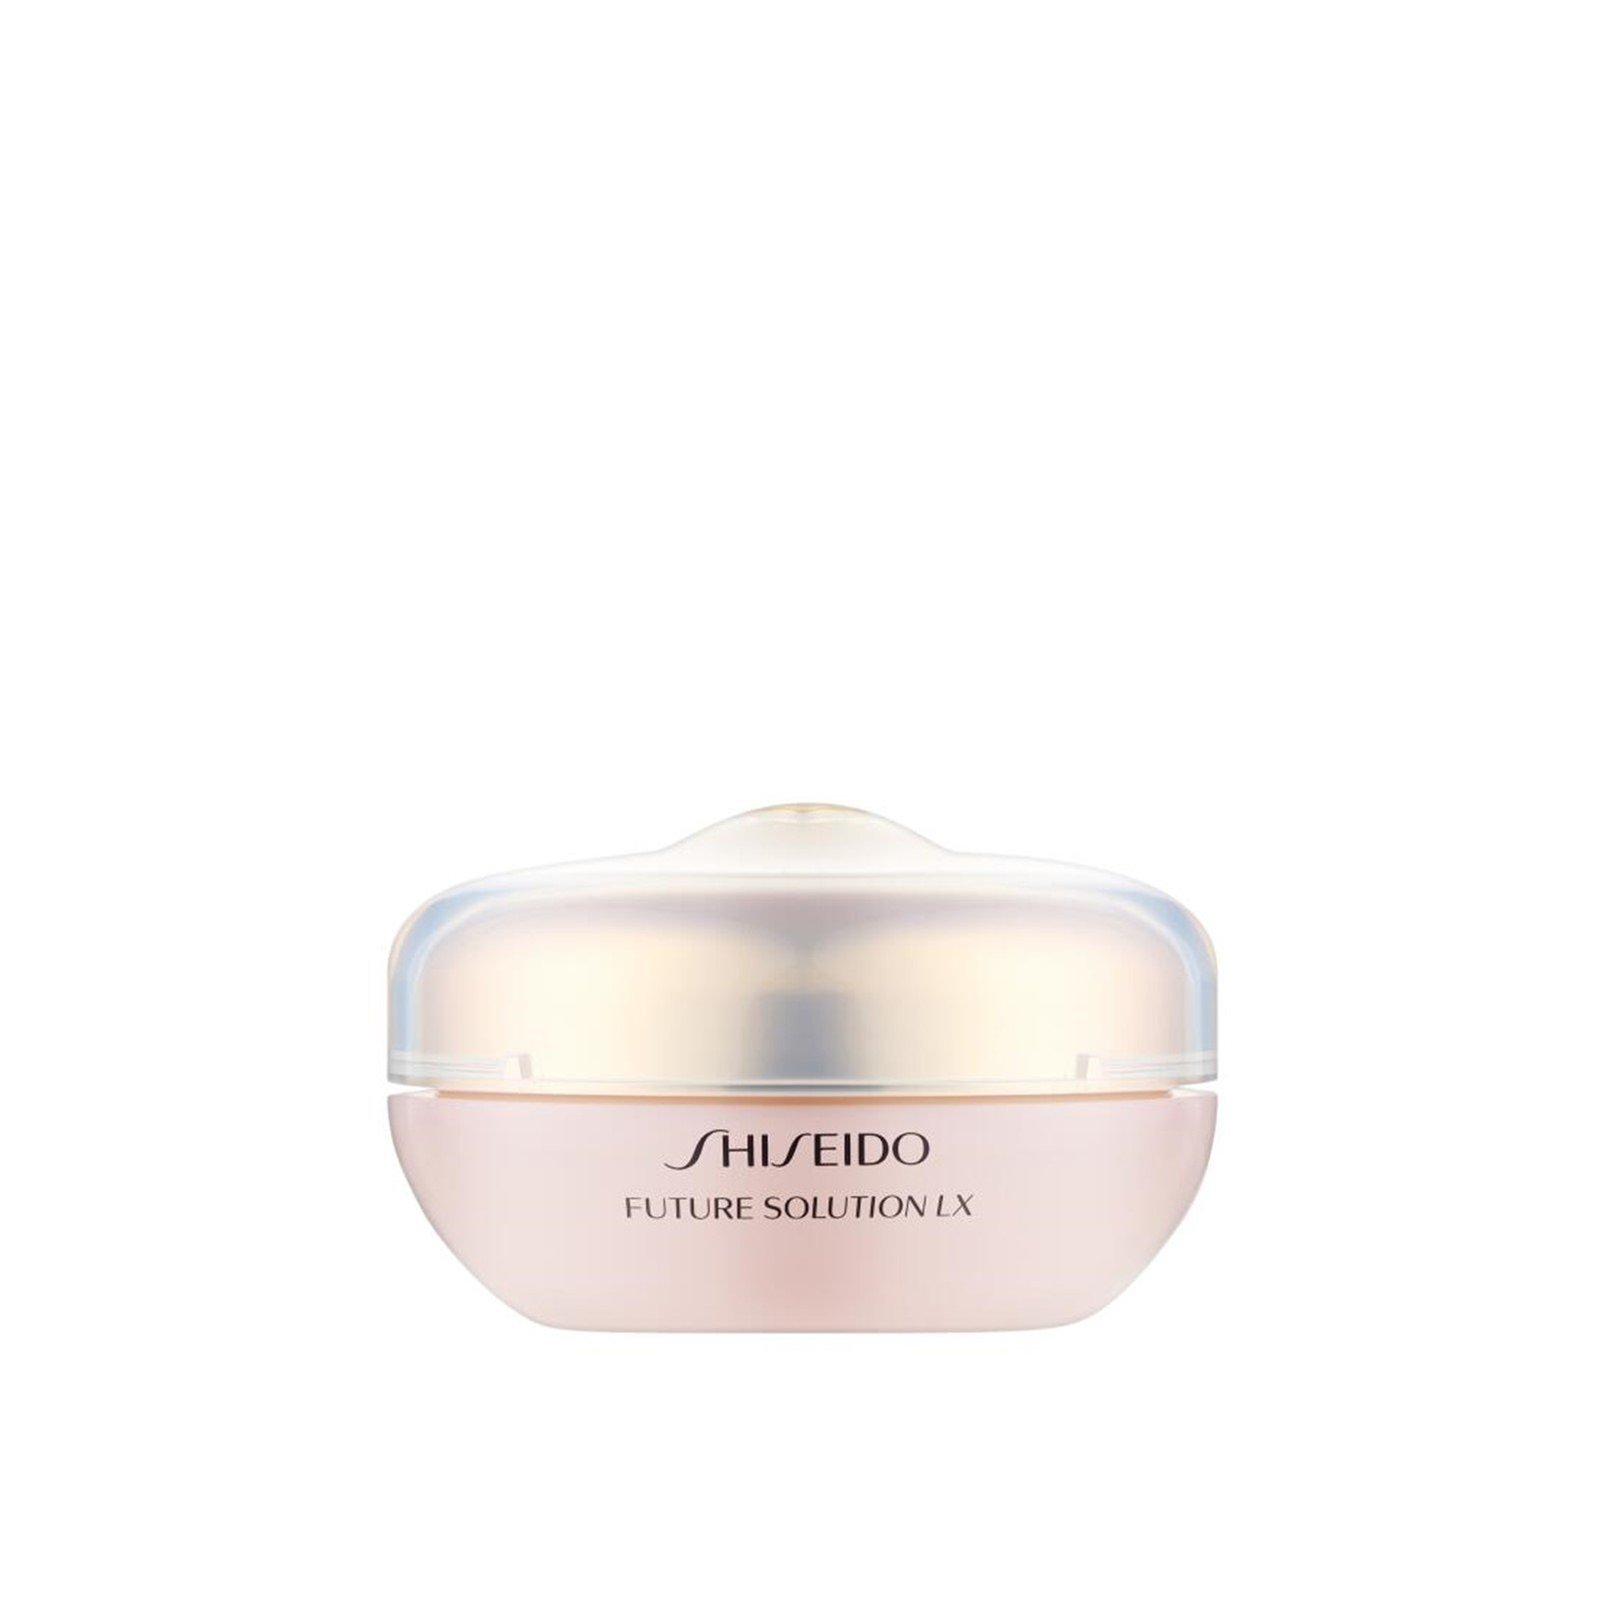 Shiseido Future Solution LX Total Radiance Loose Powder 13g (0.45oz)